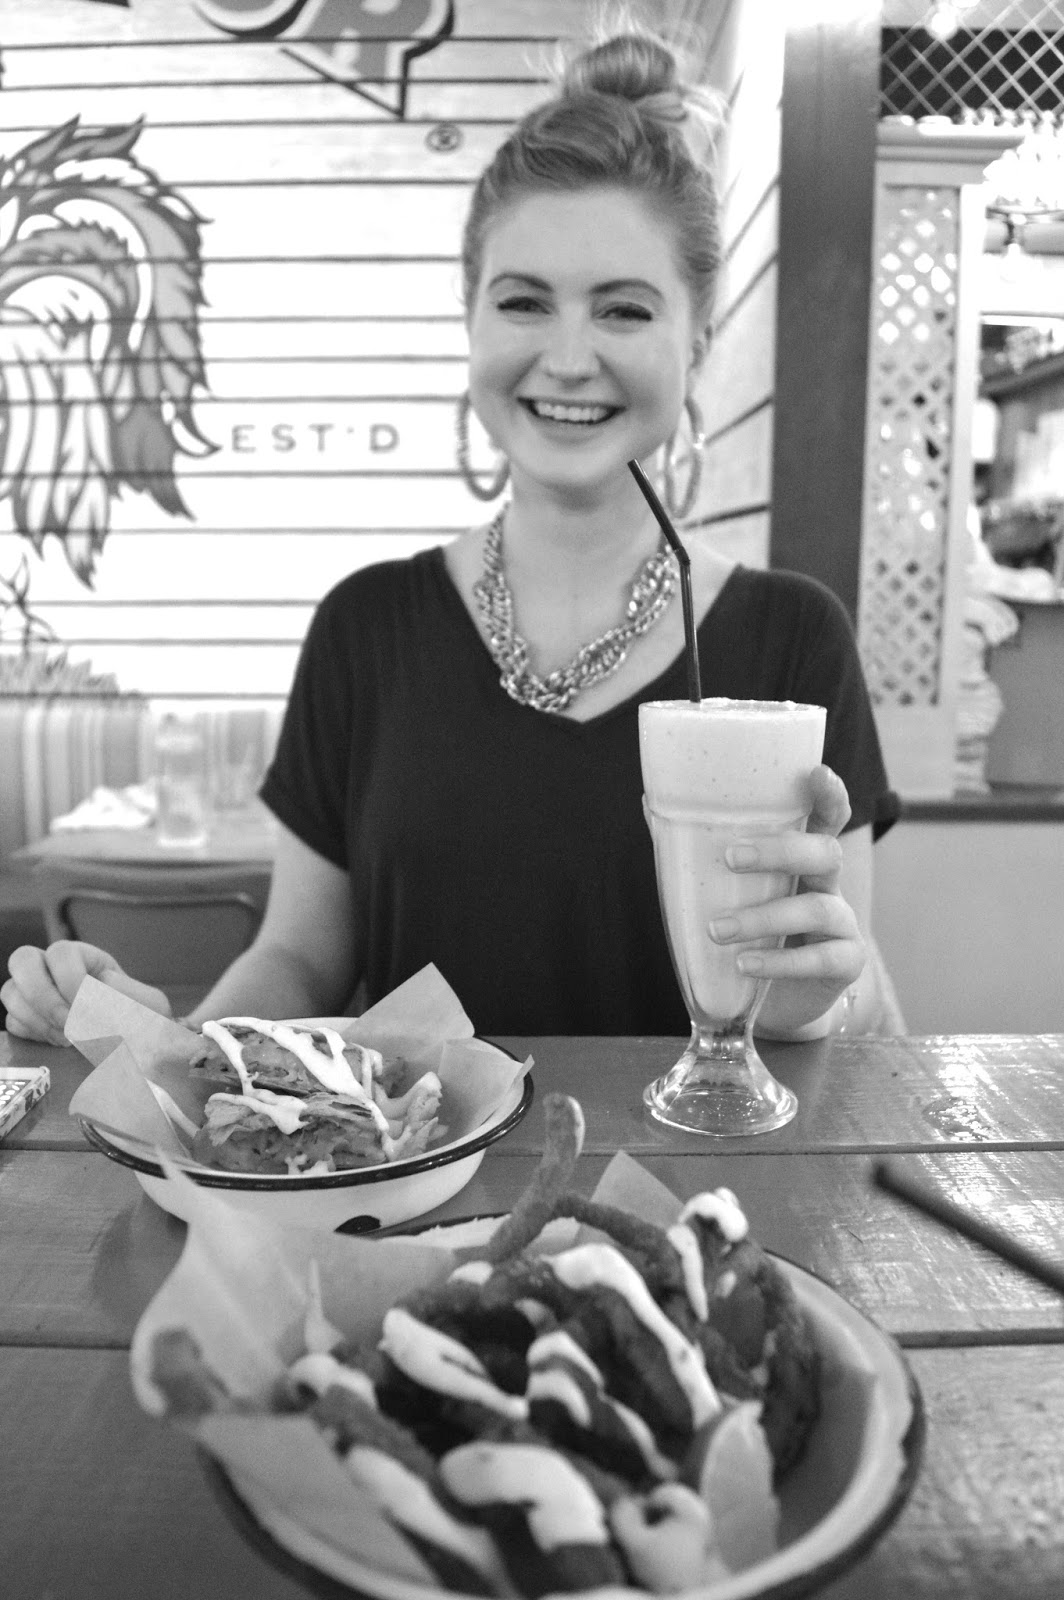 Turtle Bay Southampton review, food bloggers, UK food bloggers, Hampshire bloggers, places to eat Southampton, Caribbean food